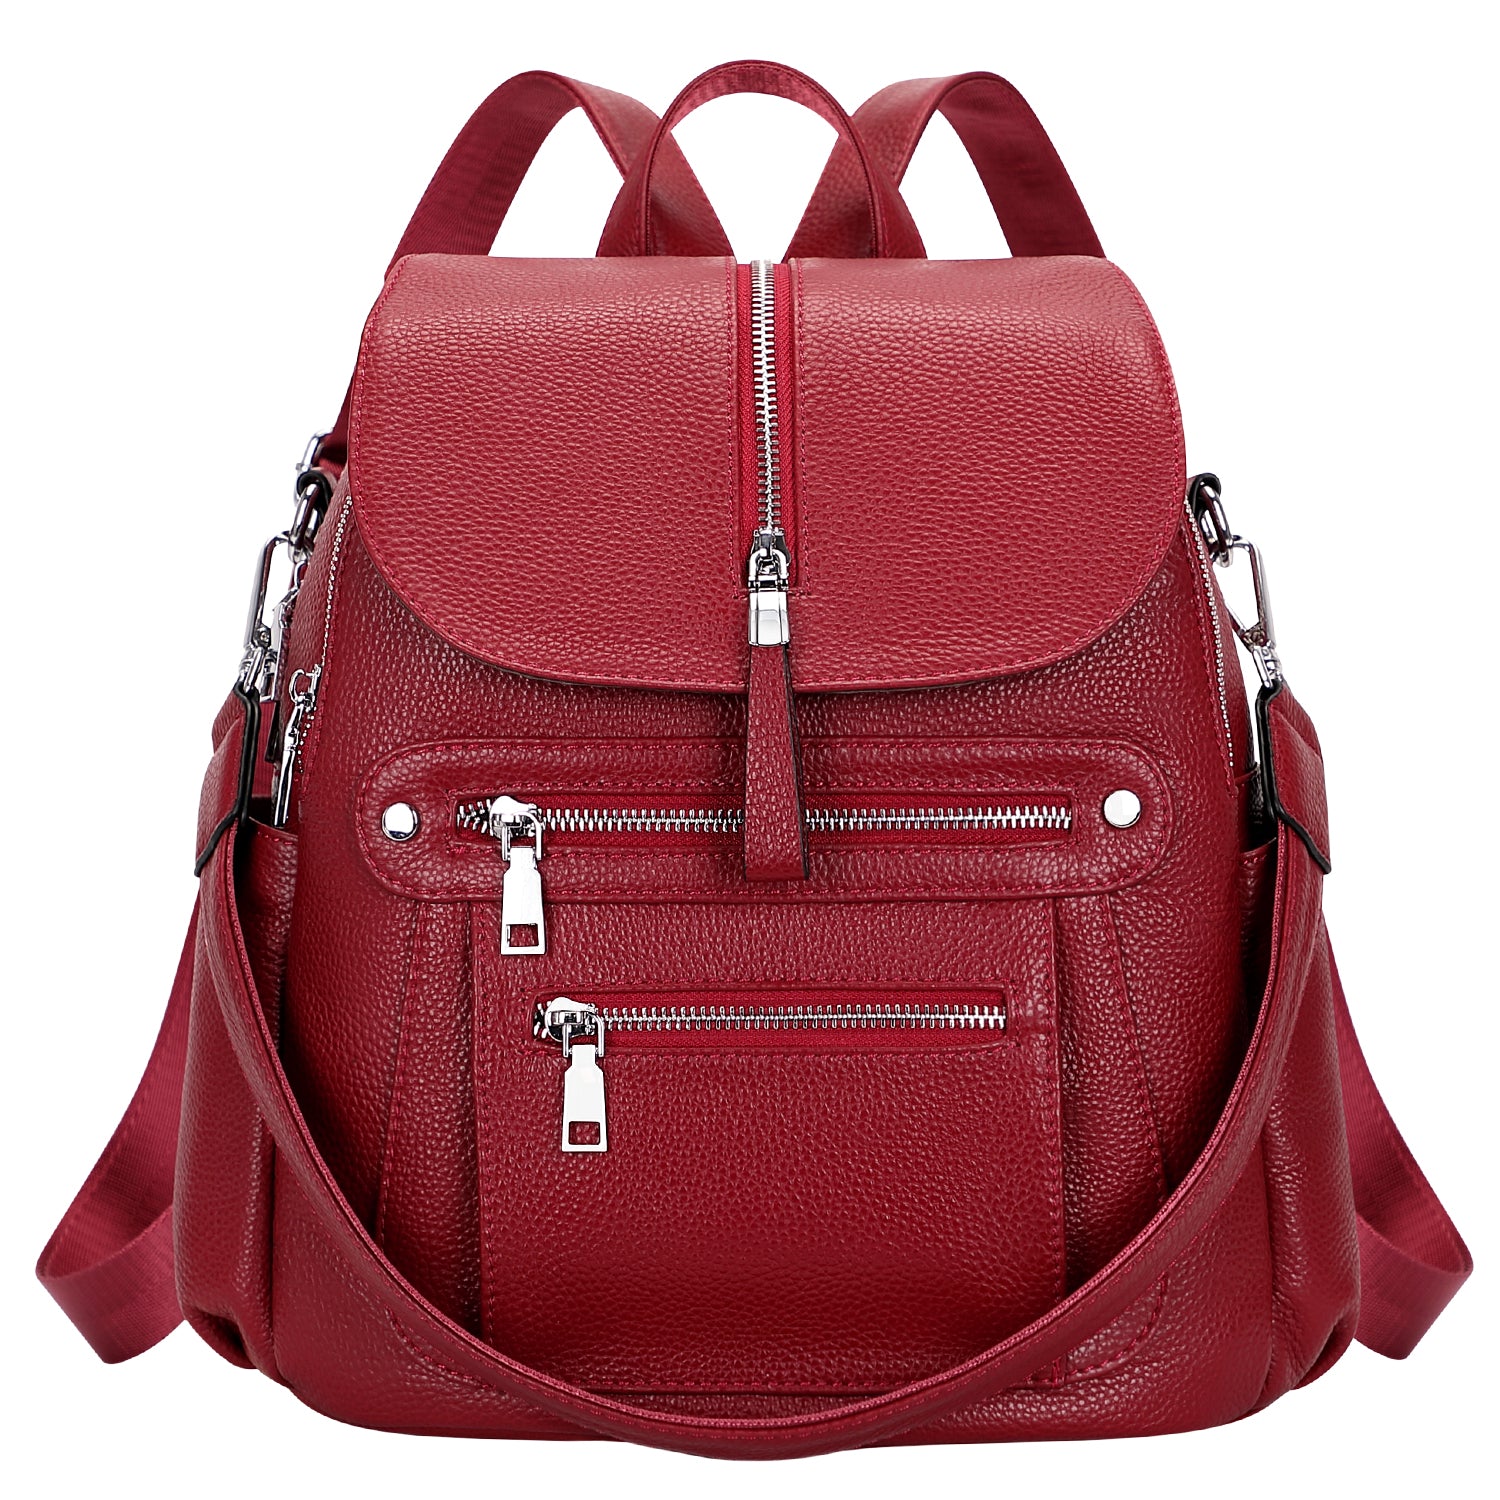 ALTOSY Leather Backpack Purse for Women Fashion Casual Handbag